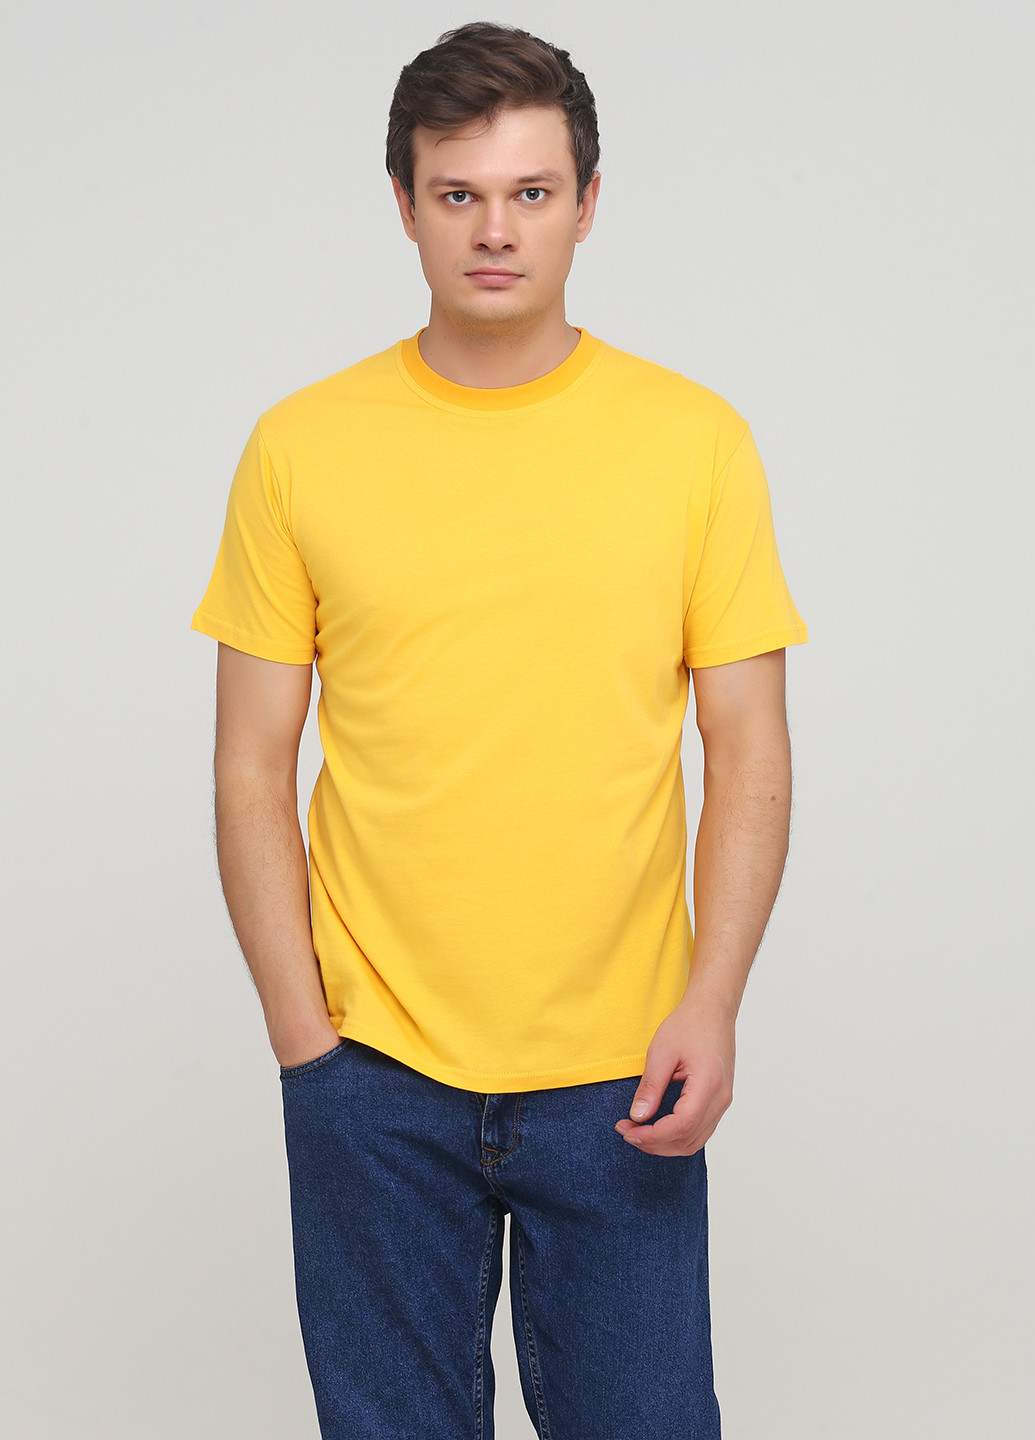 Желтая футболка мужская 19м319-17 синяя(електро) с коротким рукавом Malta